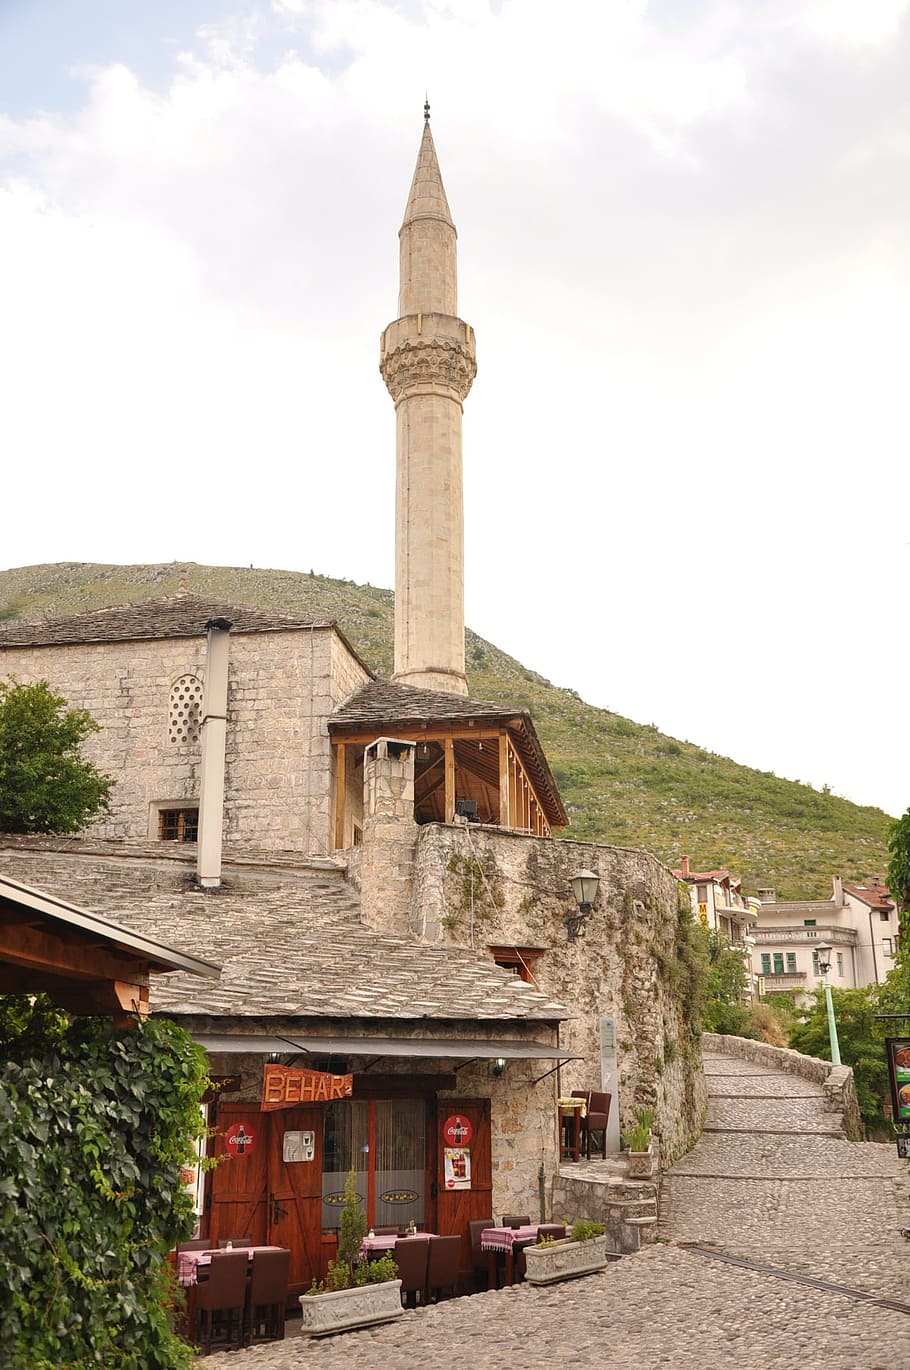 bosnia, mostar, monument, mountain, travel, vacancy, architecture, history, stones, religious monuments